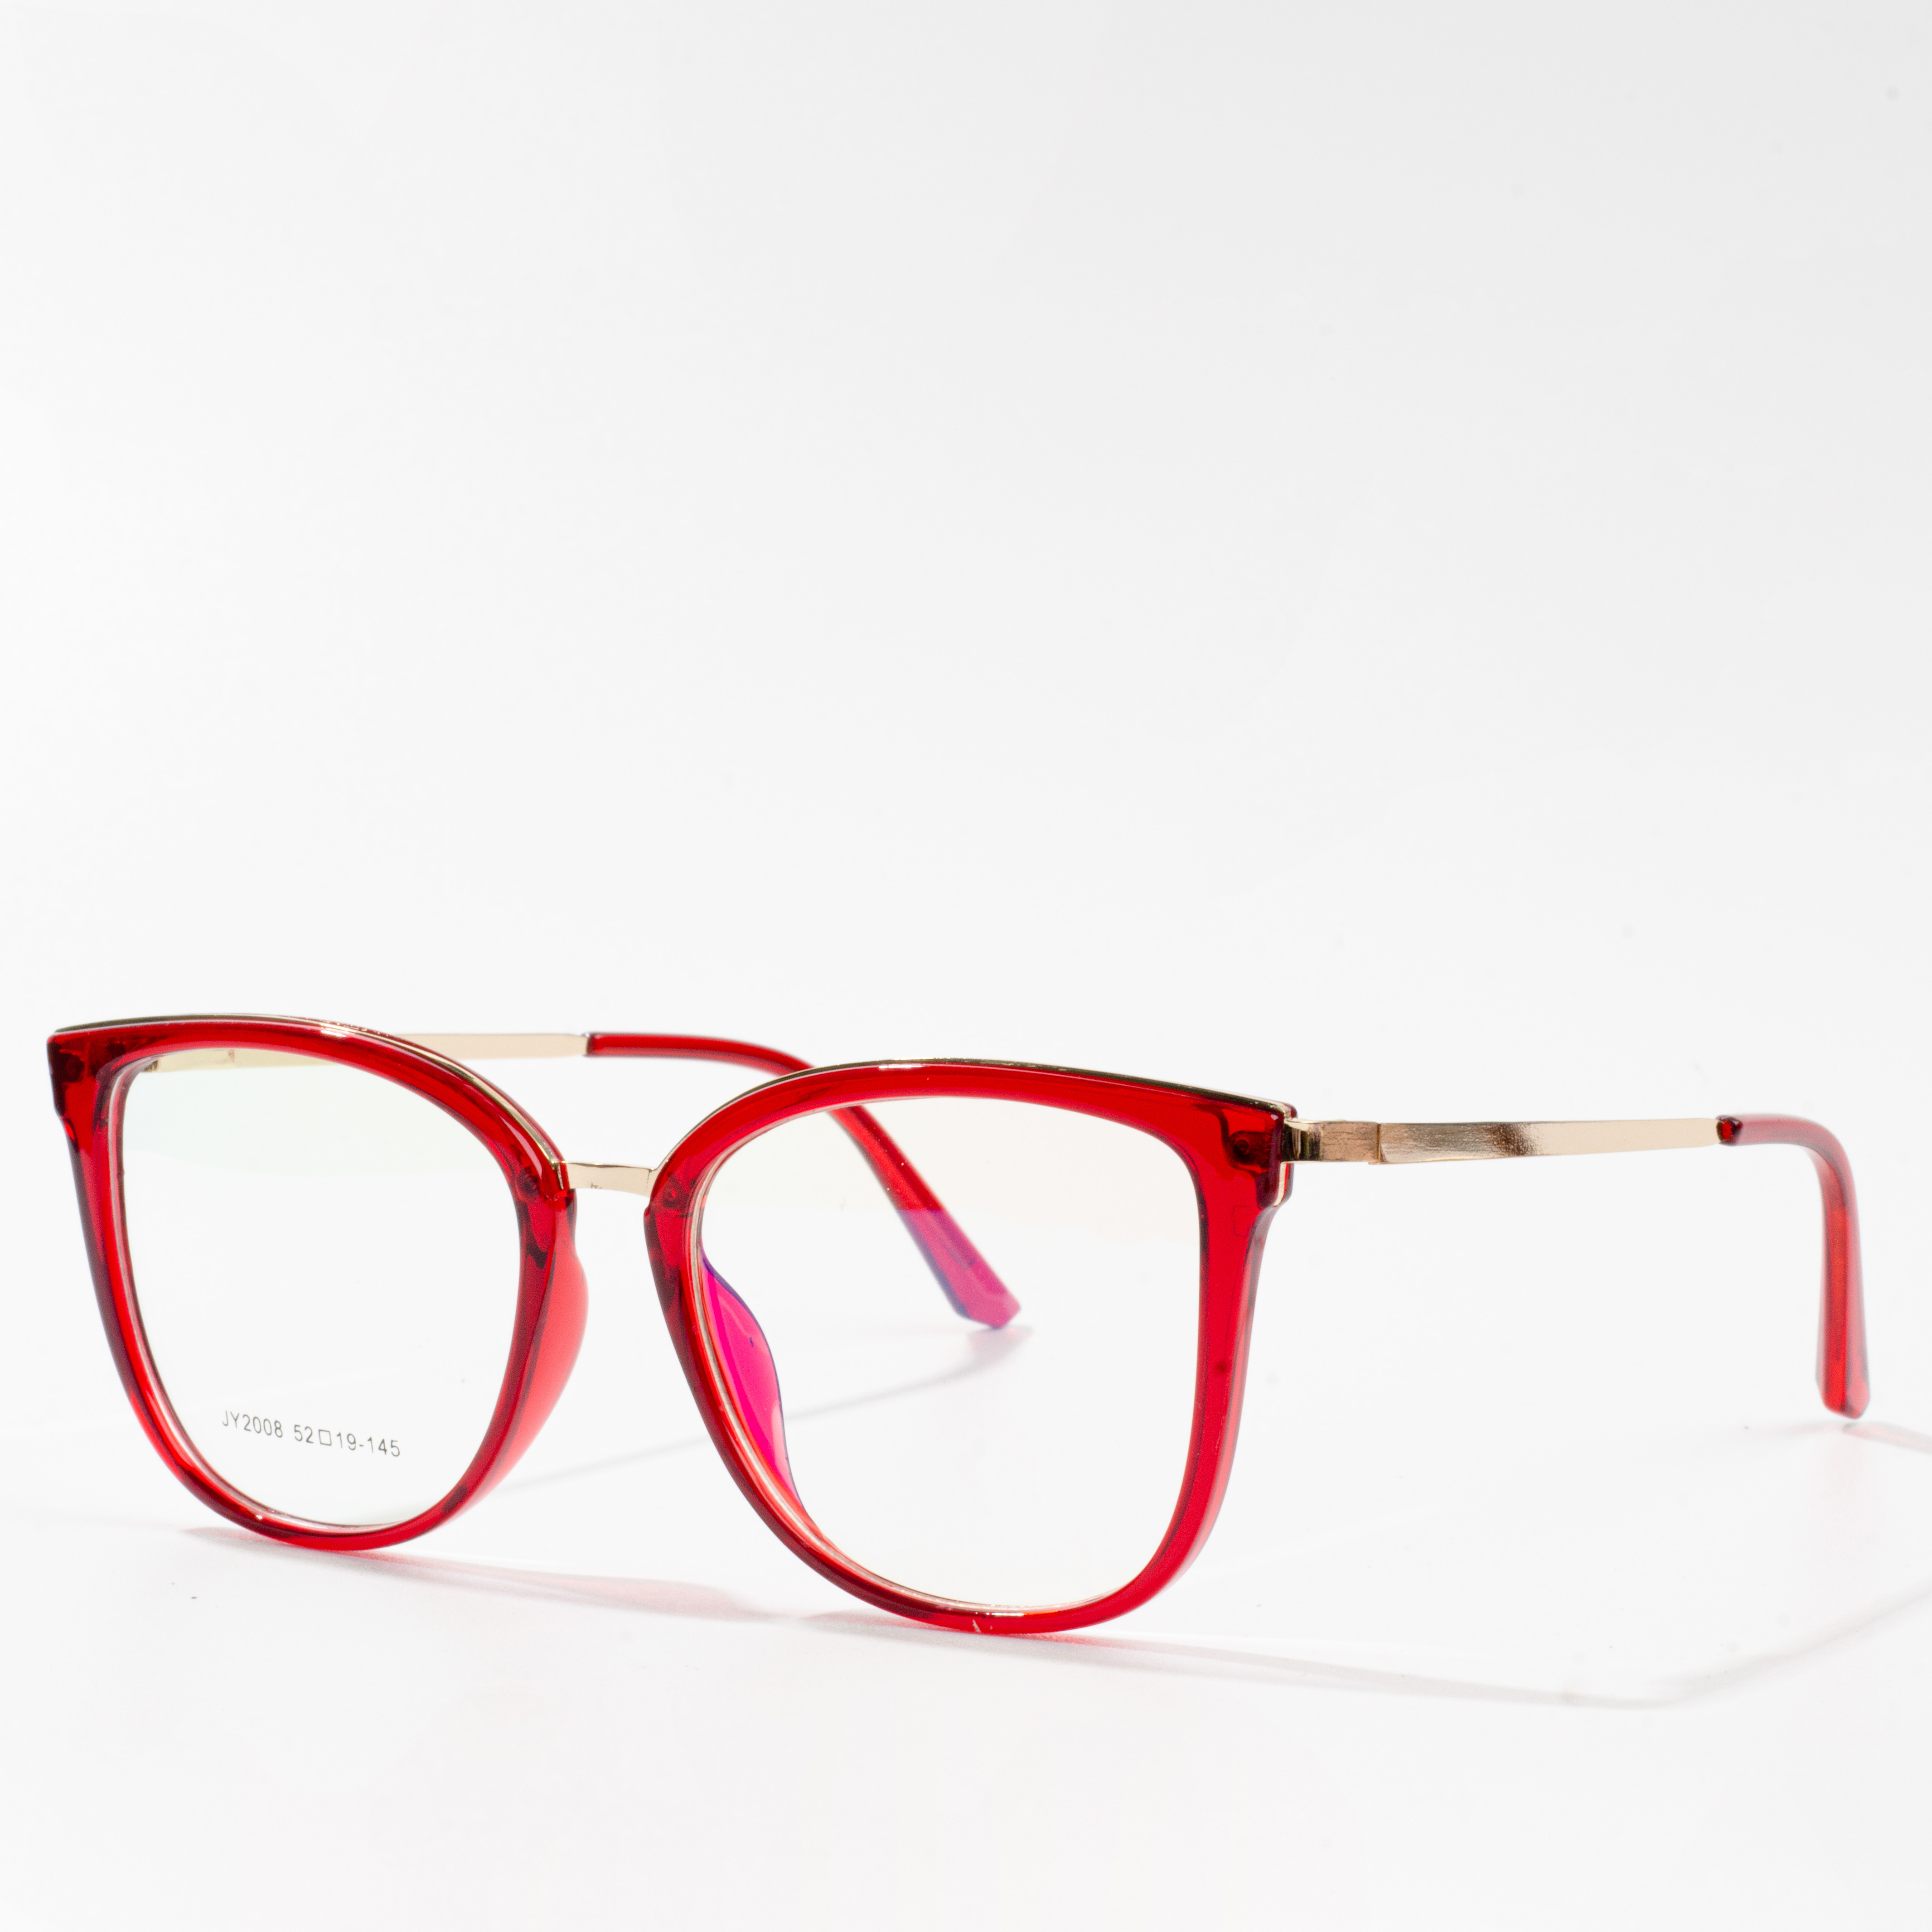 name brand eyeglass frames